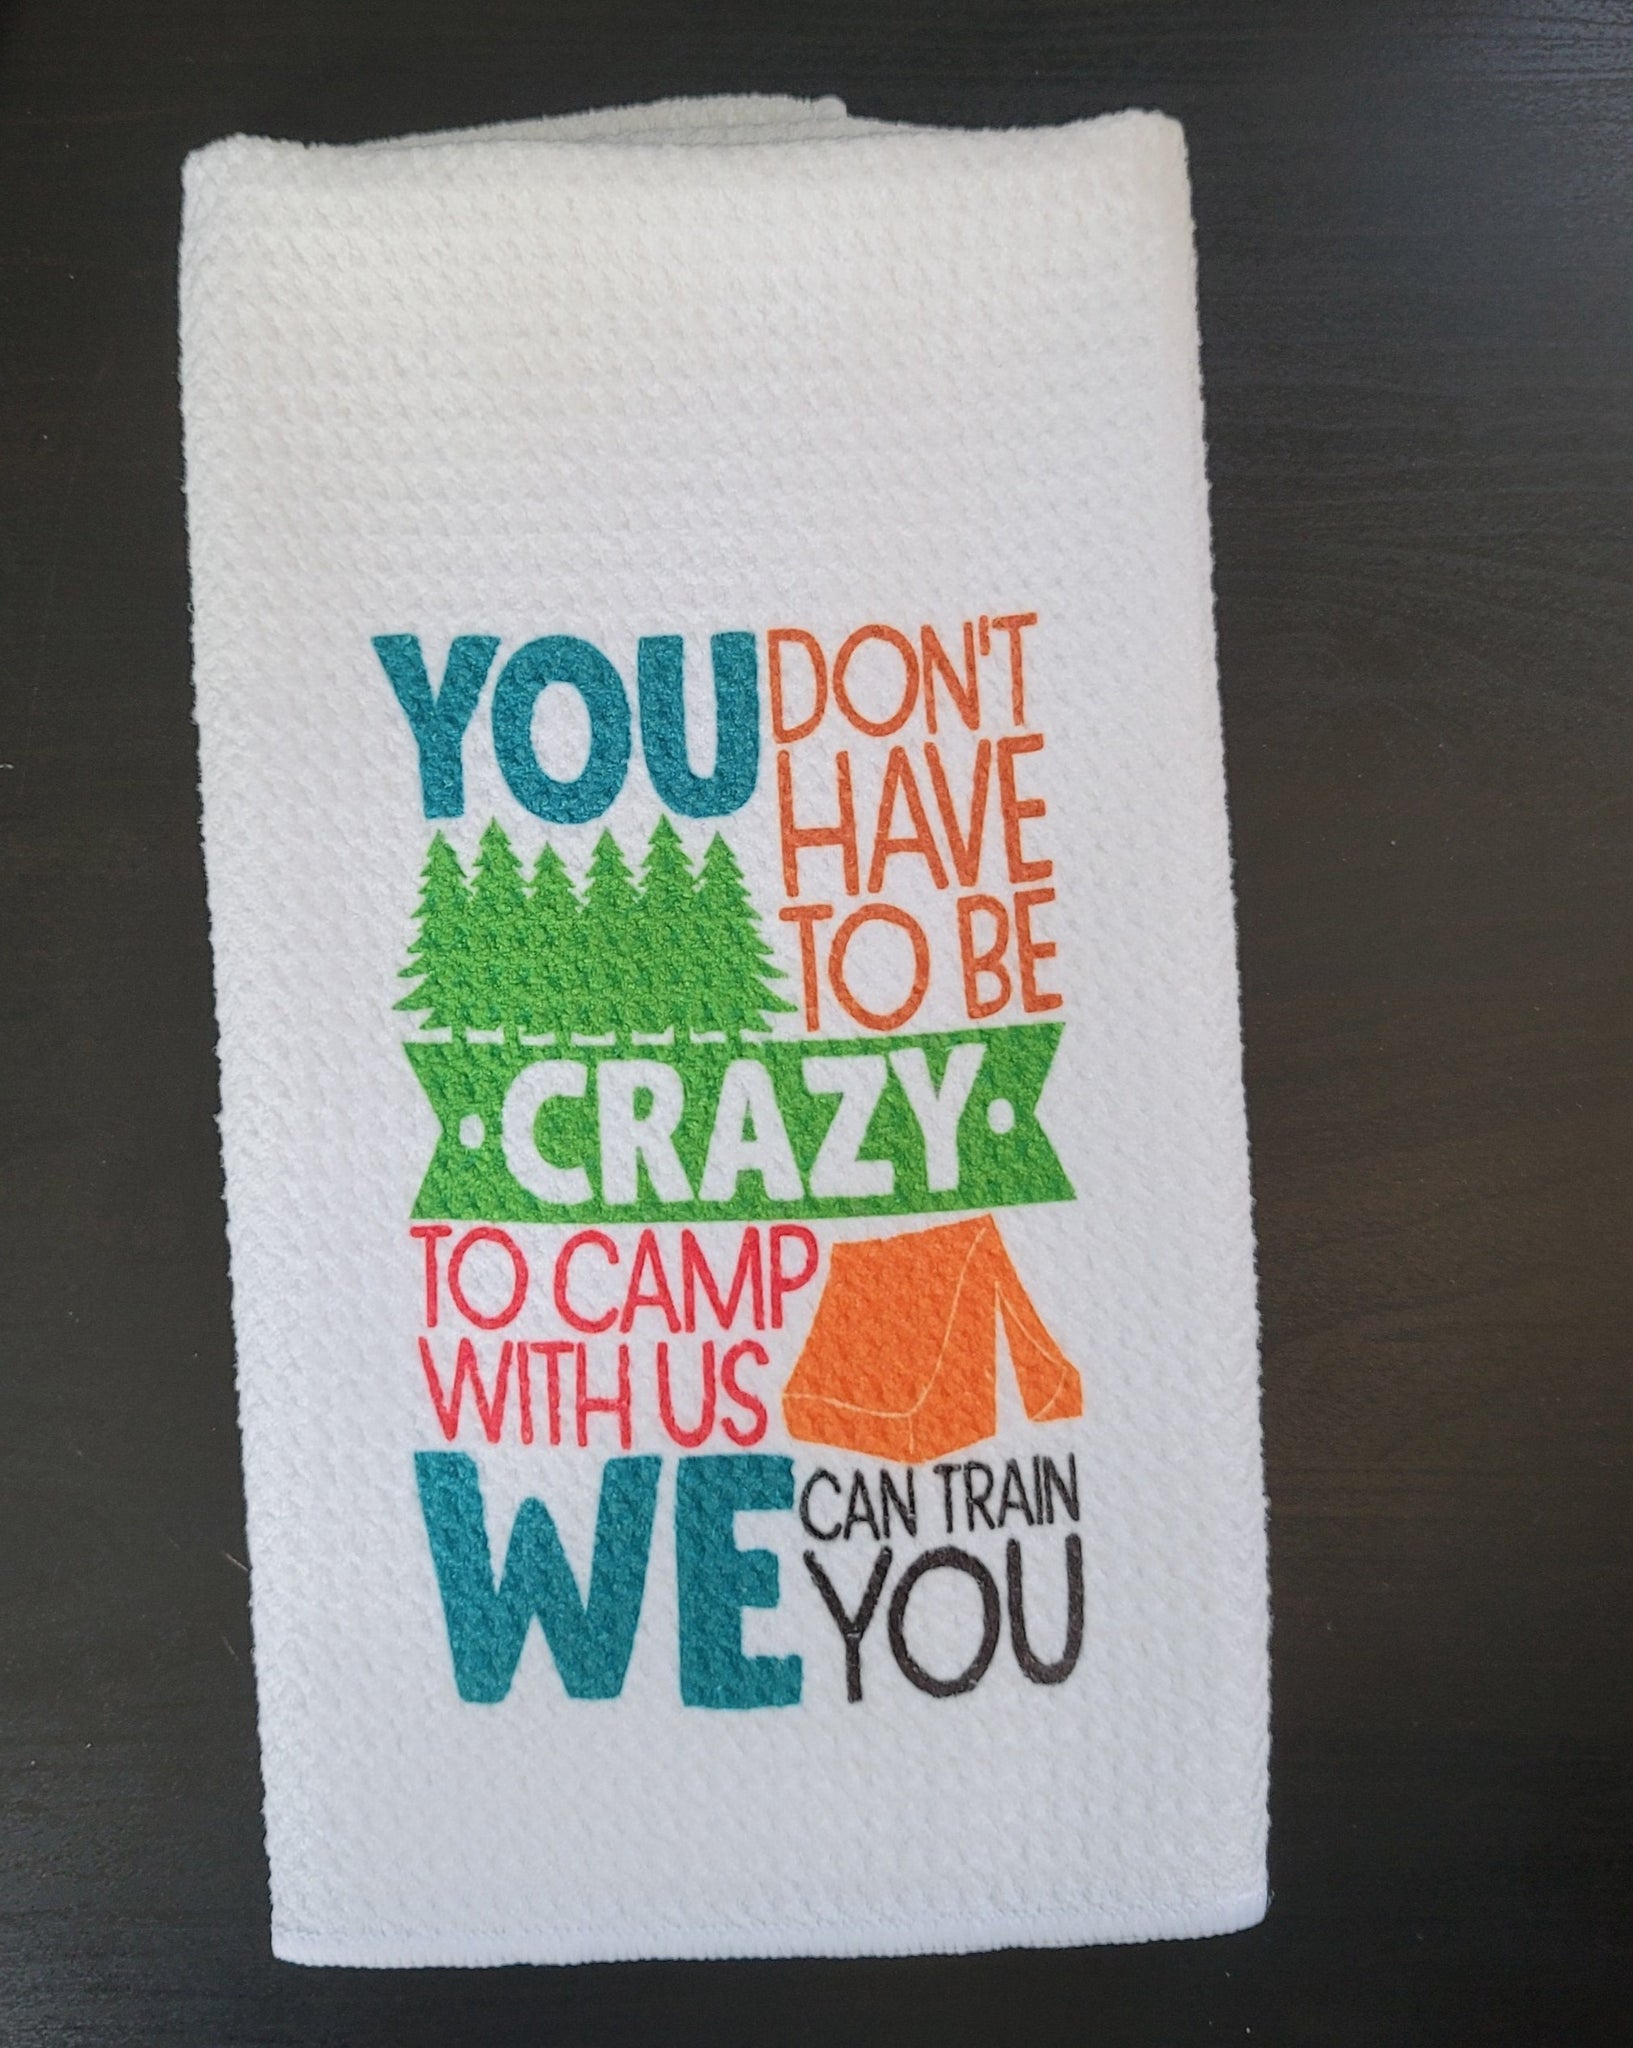 Welcome To Camp Quitcherbitchin Funny Dish Towel - Tea Towel